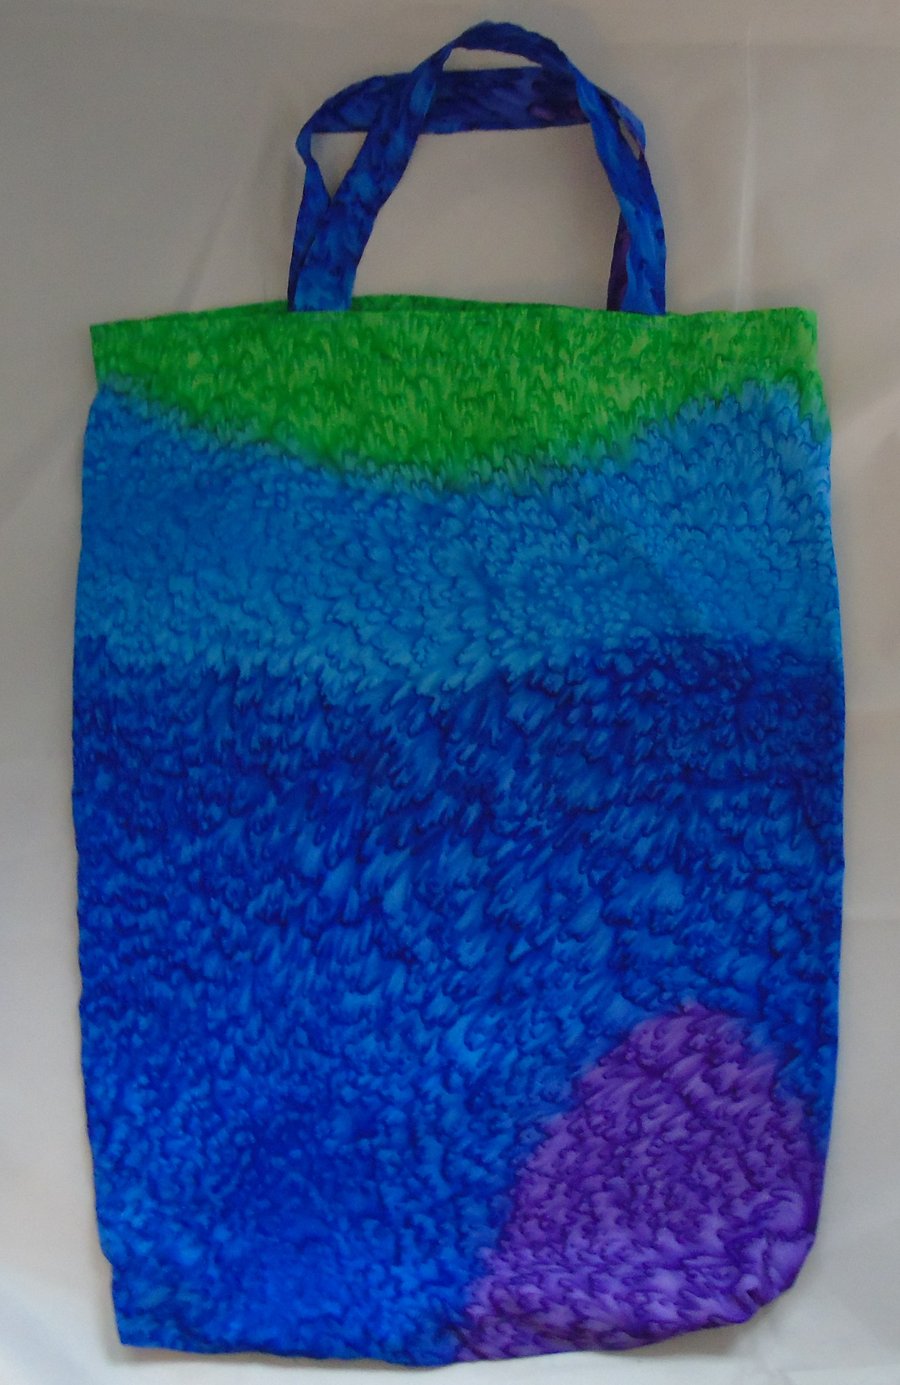 Silk Shopping or Tote Bag - Colourful Design 